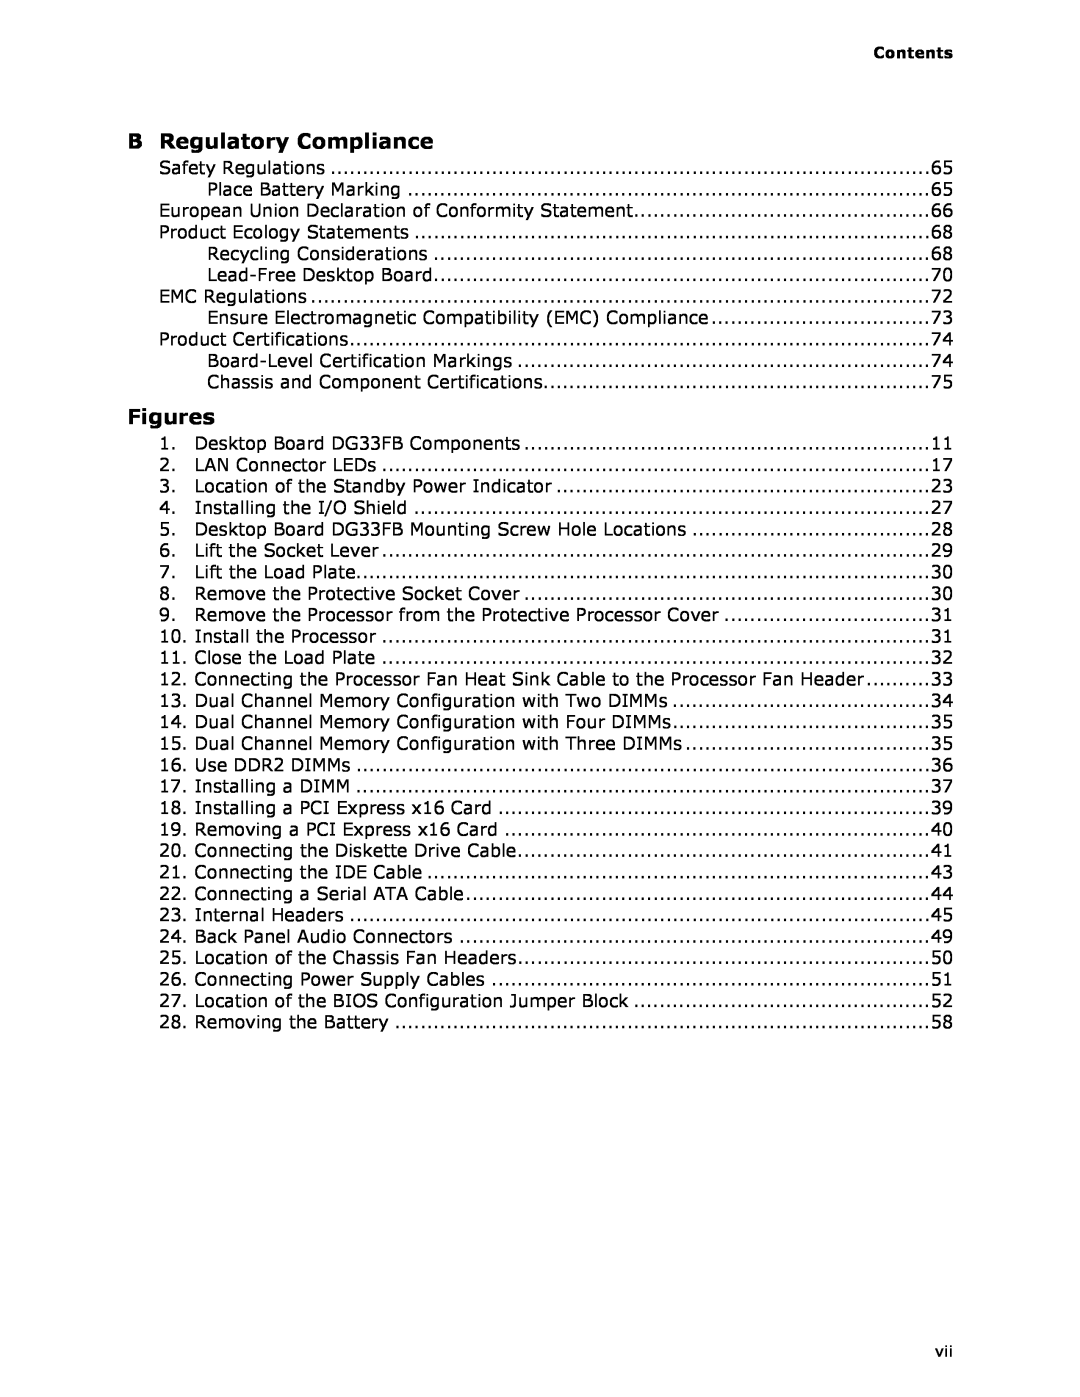 Intel DG33FB manual B Regulatory Compliance, Figures, Contents 